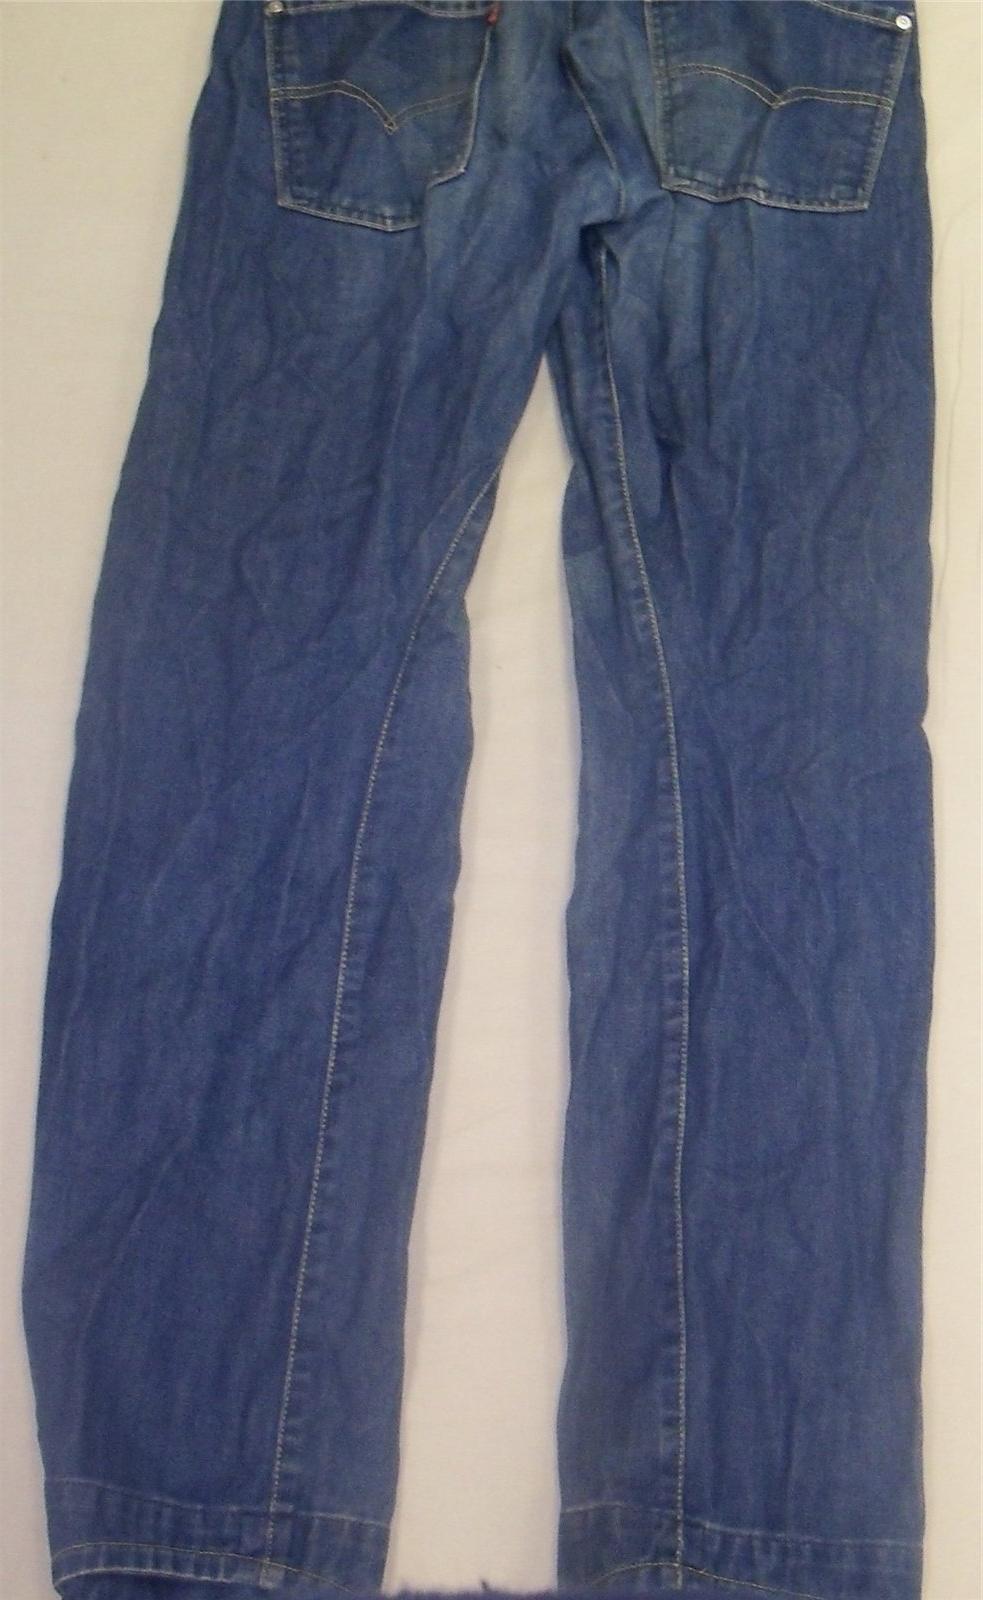 Levi Strauss Light Blue jeans